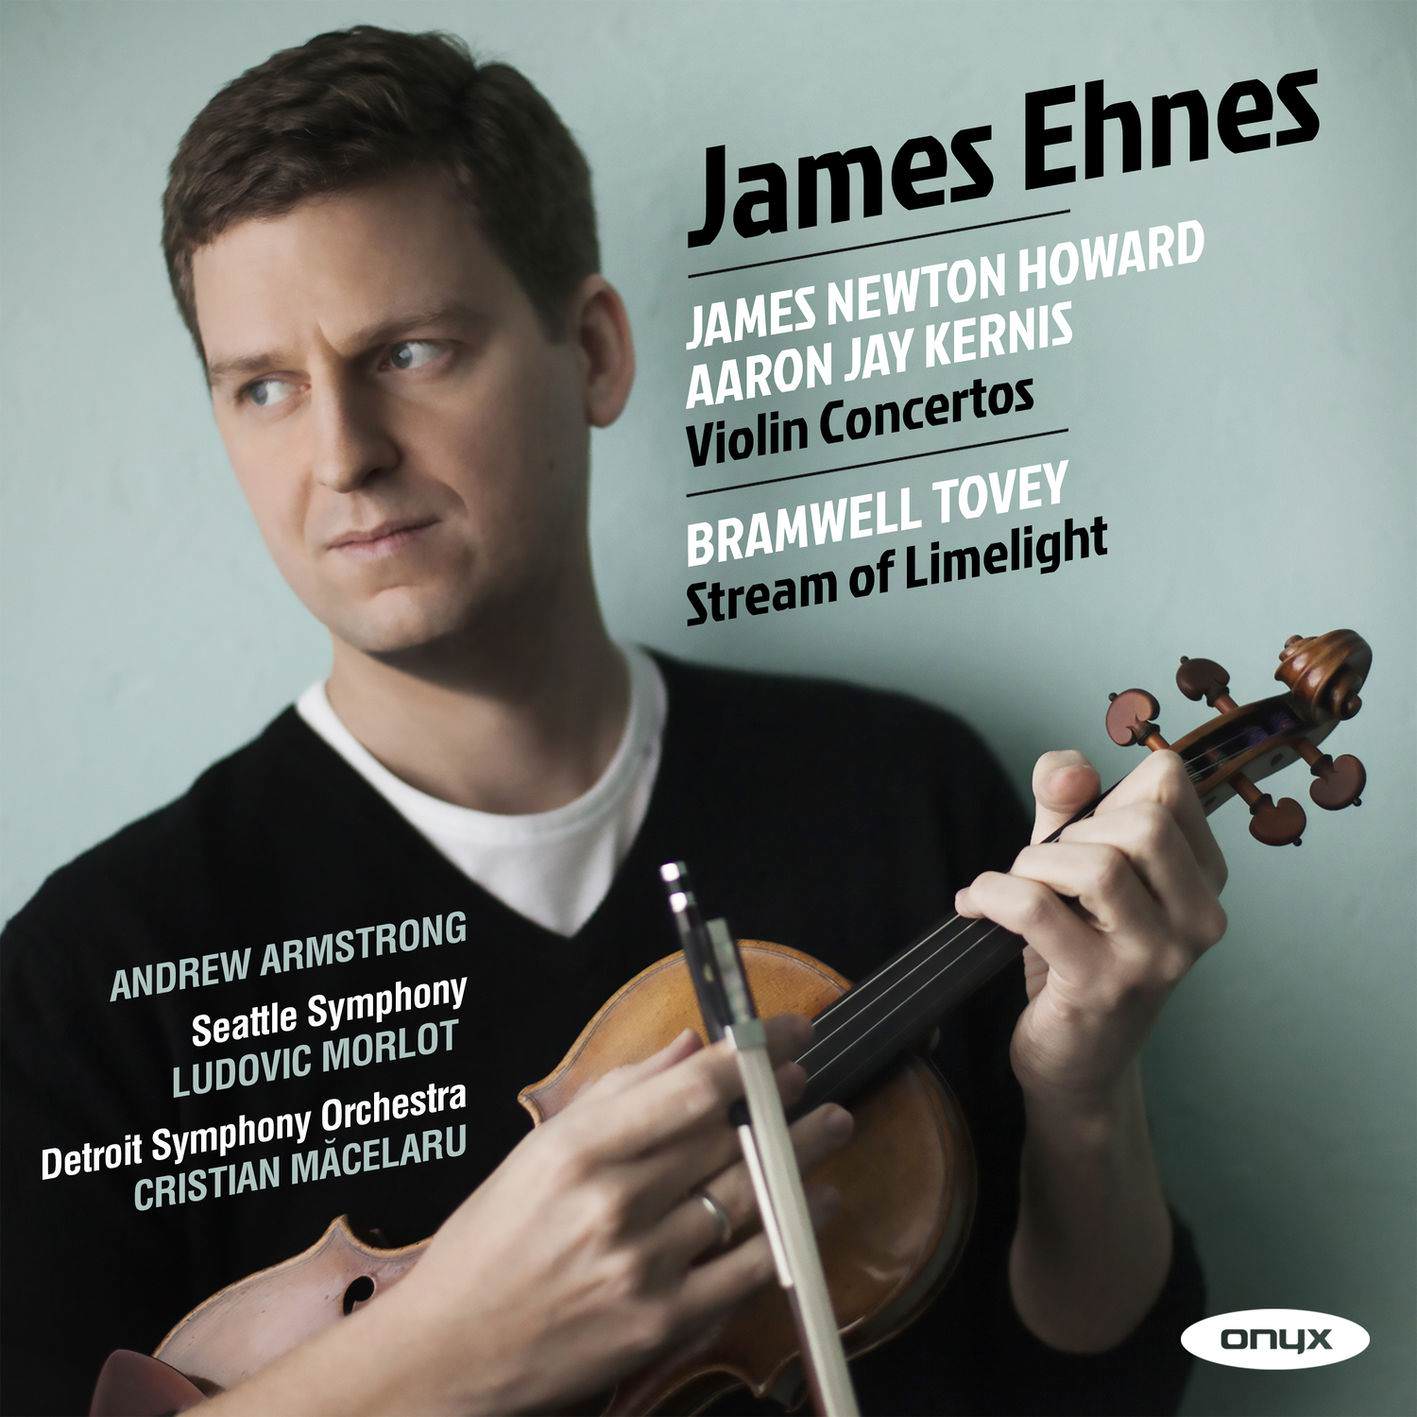 James Ehnes - James Newton Howard, Aaron Jay Kernis Violin Concertos, Bramwell Tovey, ‘Stream of Limelight’ (2018) [FLAC 24bit/96kHz]